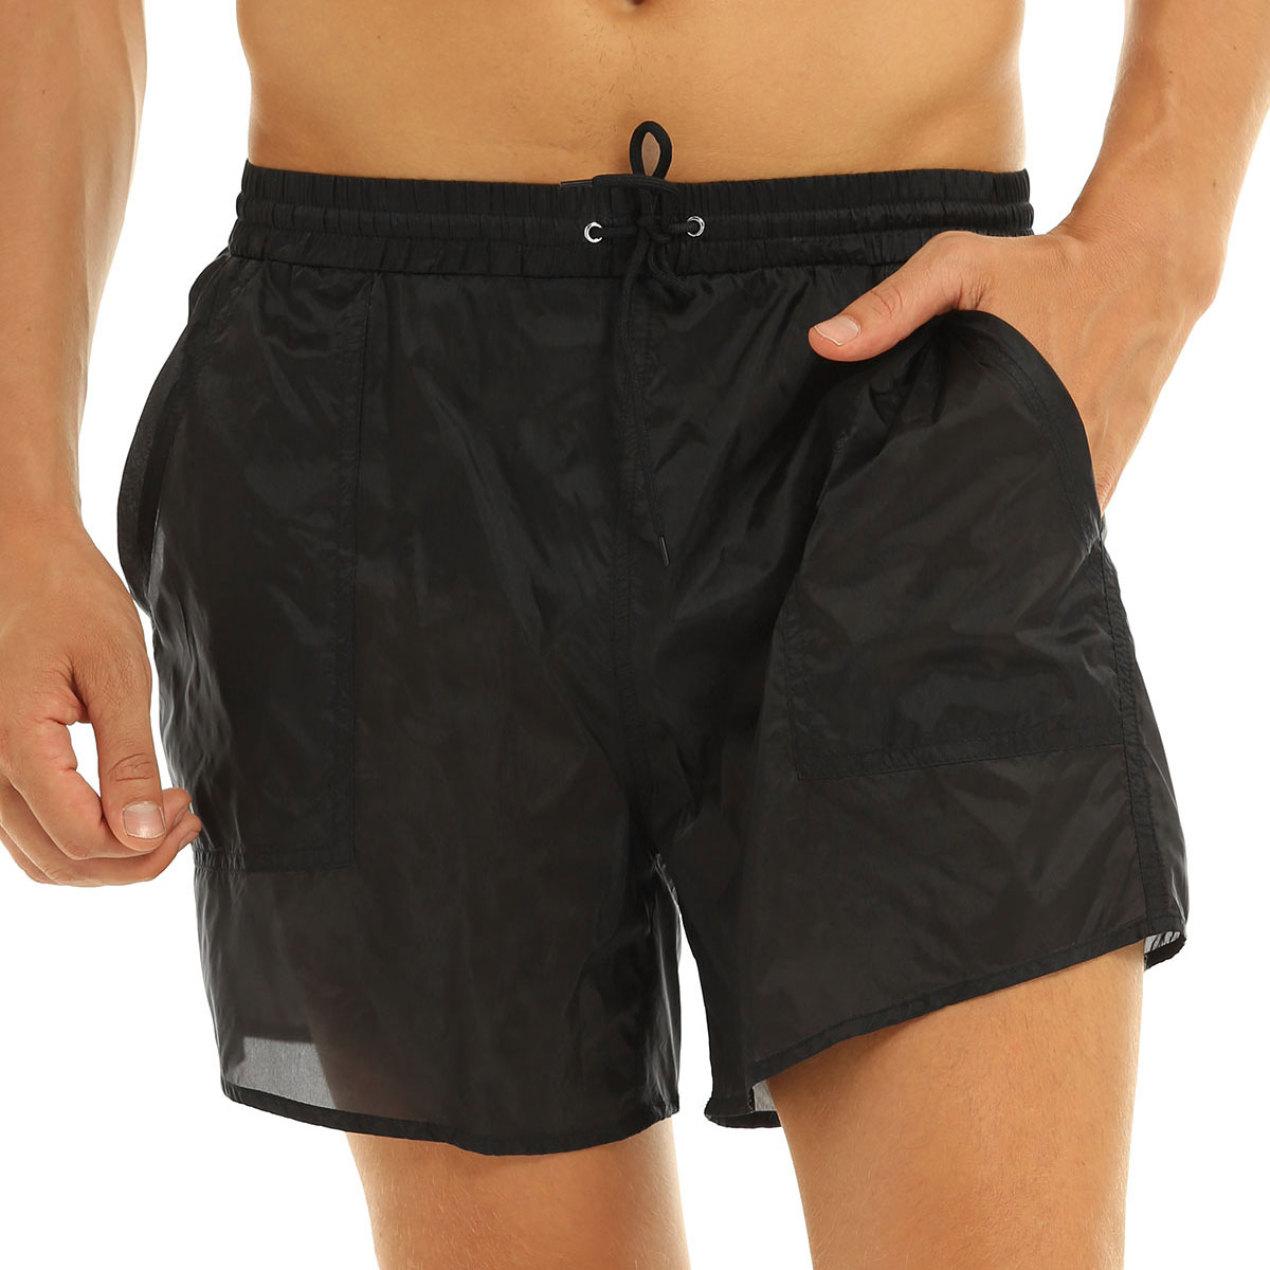 LG27HG Mens Swim Trunks Swimming Beach Shorts Swimwear Quick Dry Bathing Suits with Bulit-in Mesh Briefs